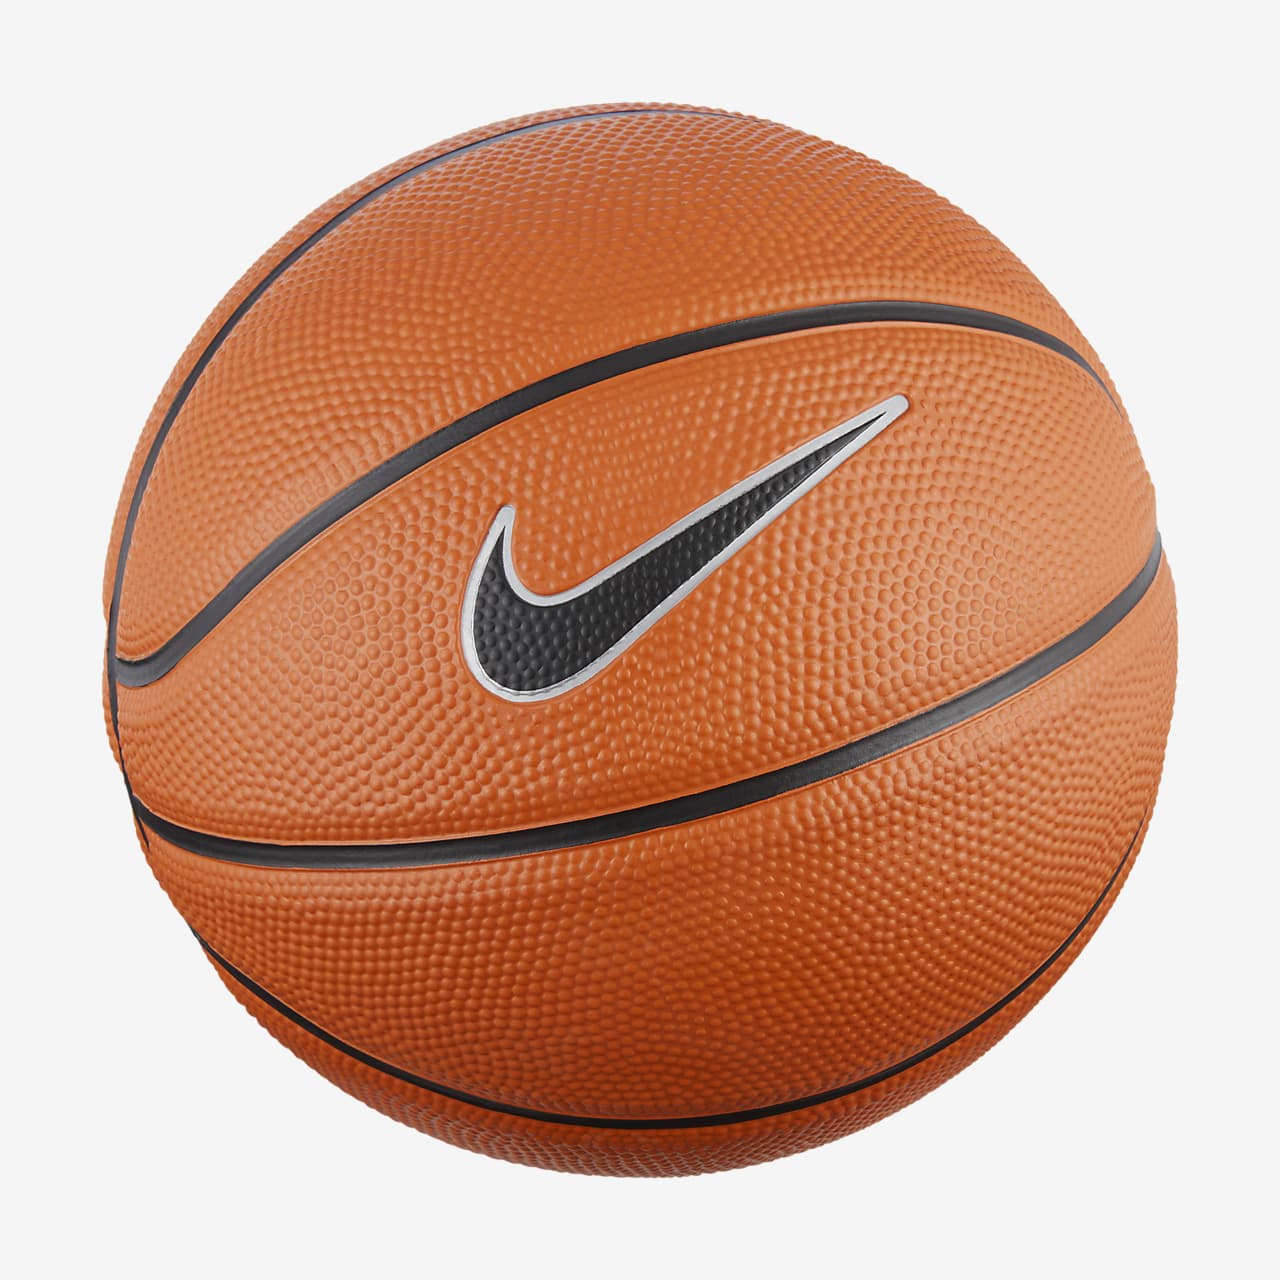 Nike Skills Basketball (Size 3)